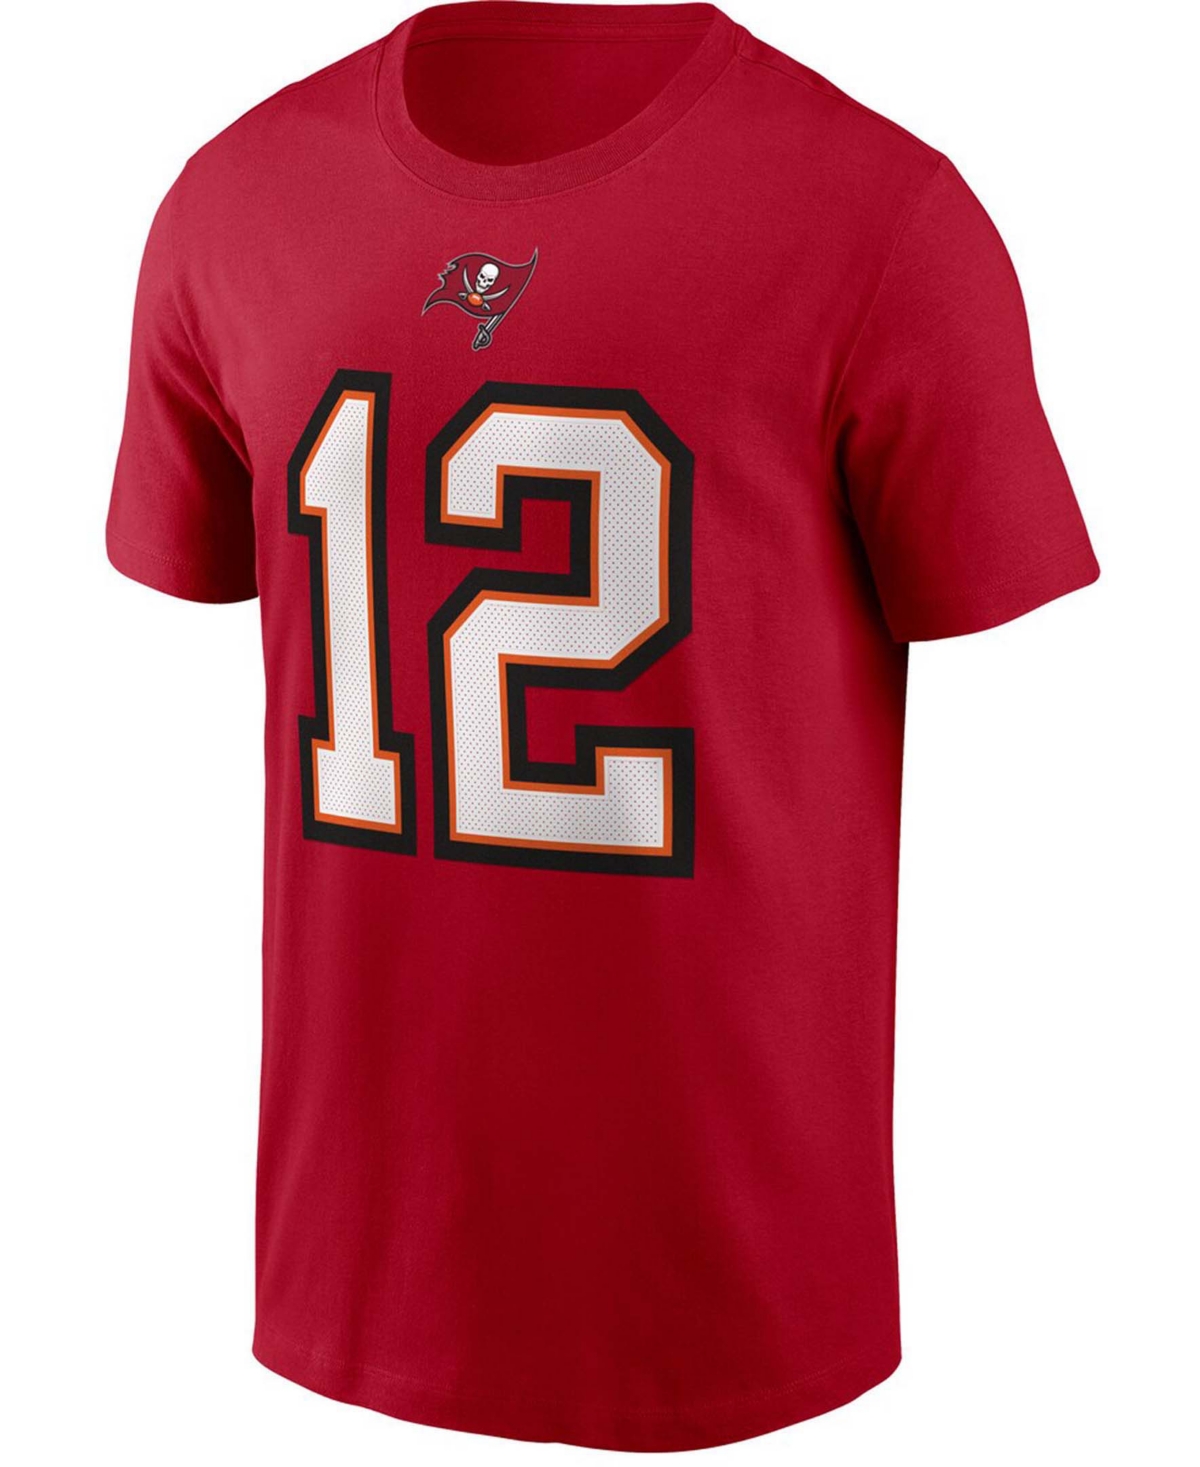 Shop Nike Men's Tom Brady Red Tampa Bay Buccaneers Name Number T-shirt